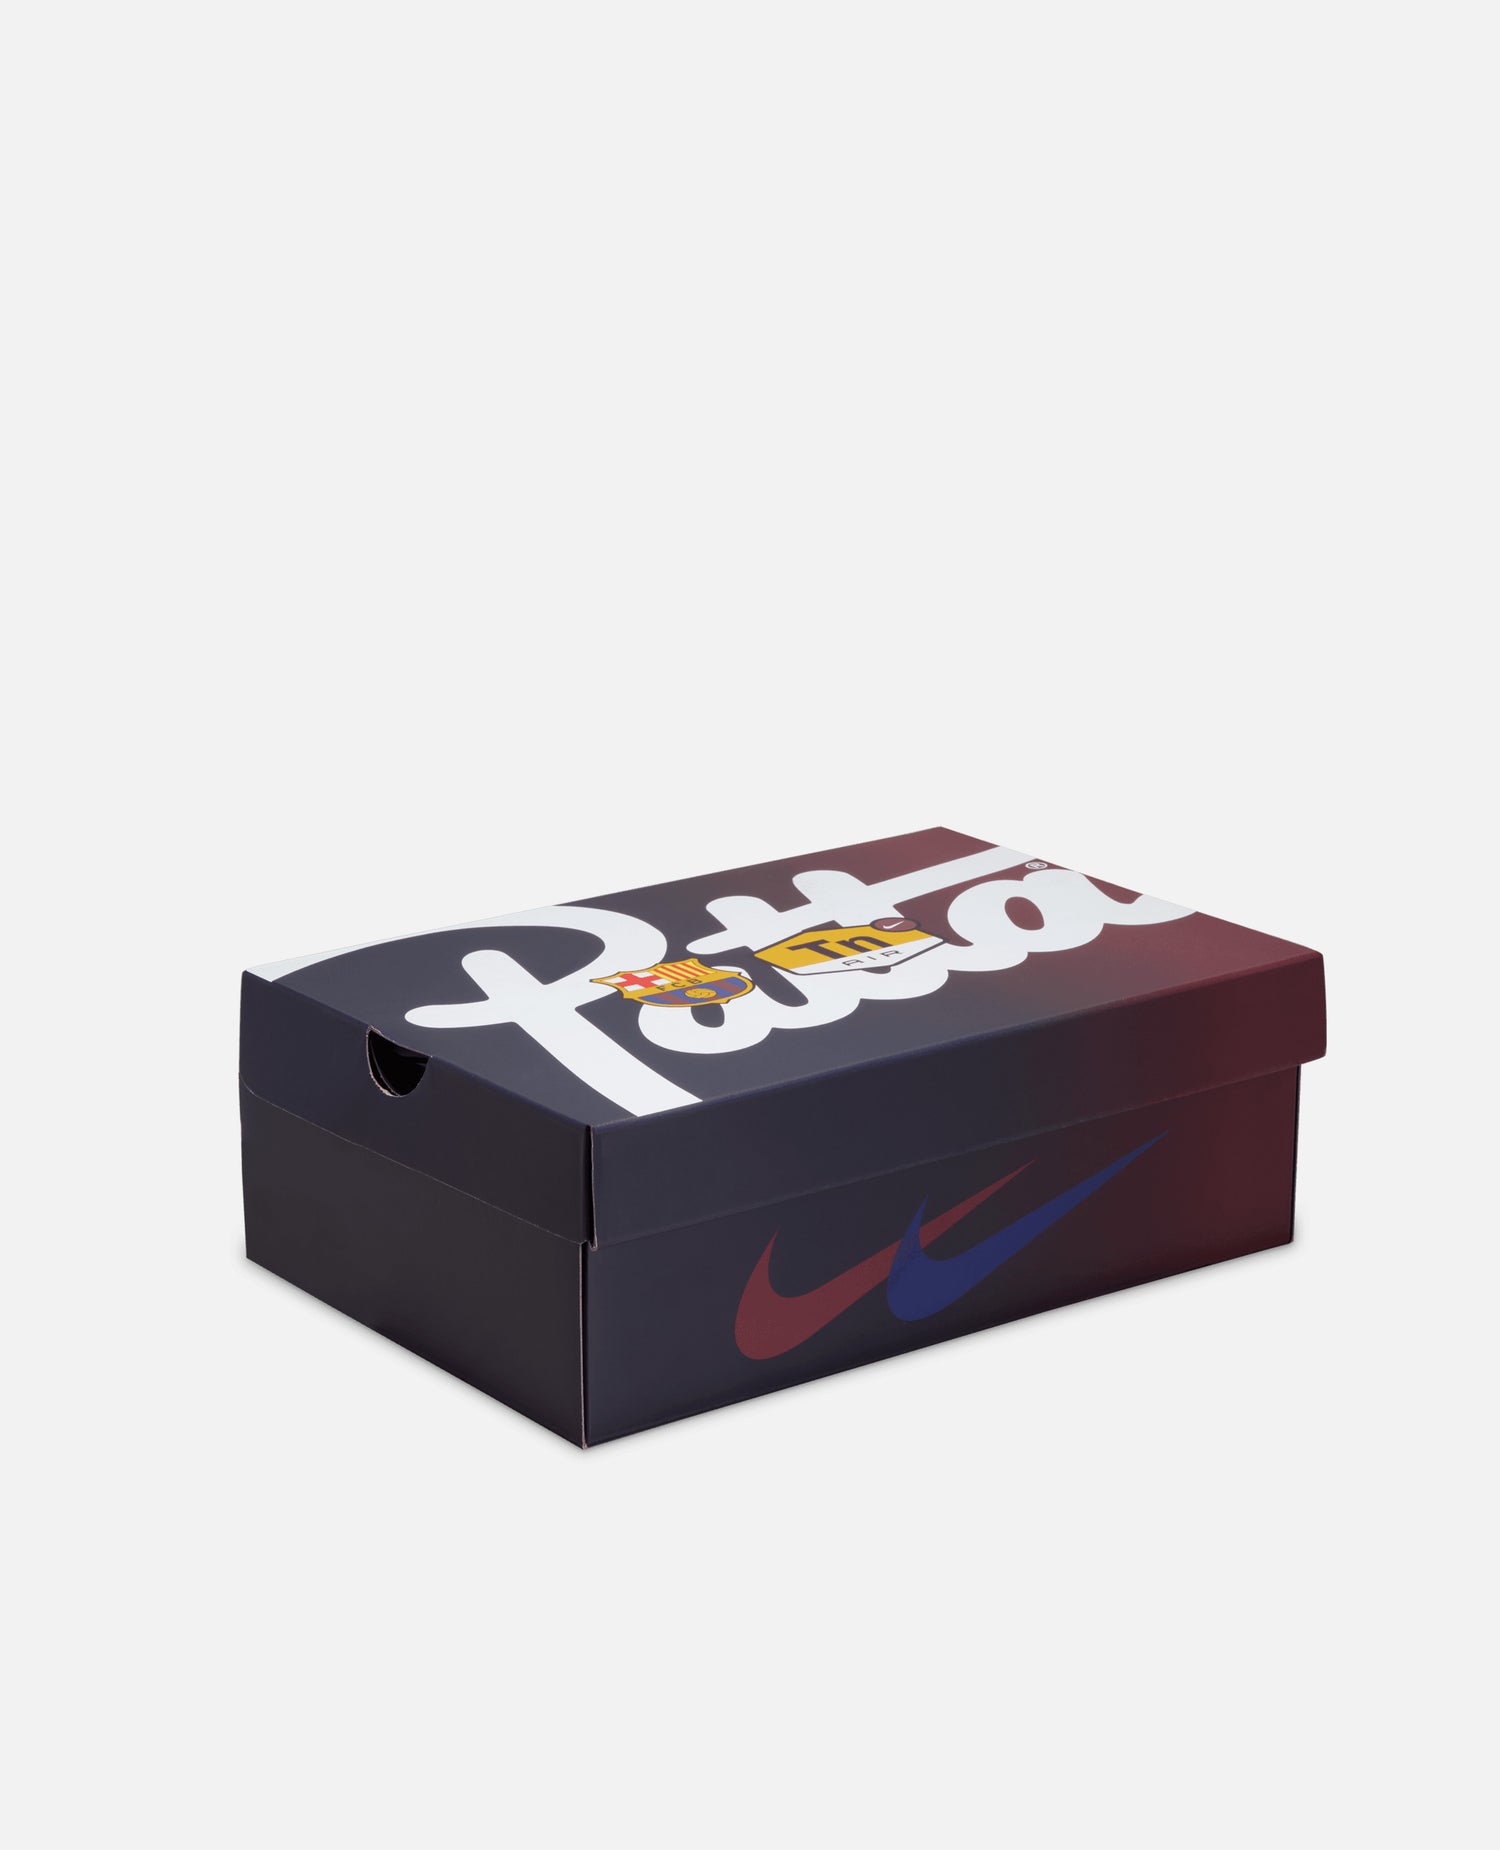 FCB x Patta Culers del Món Nike Air Max Plus (Noir/Noble Rouge-Deep Royal Bleu)